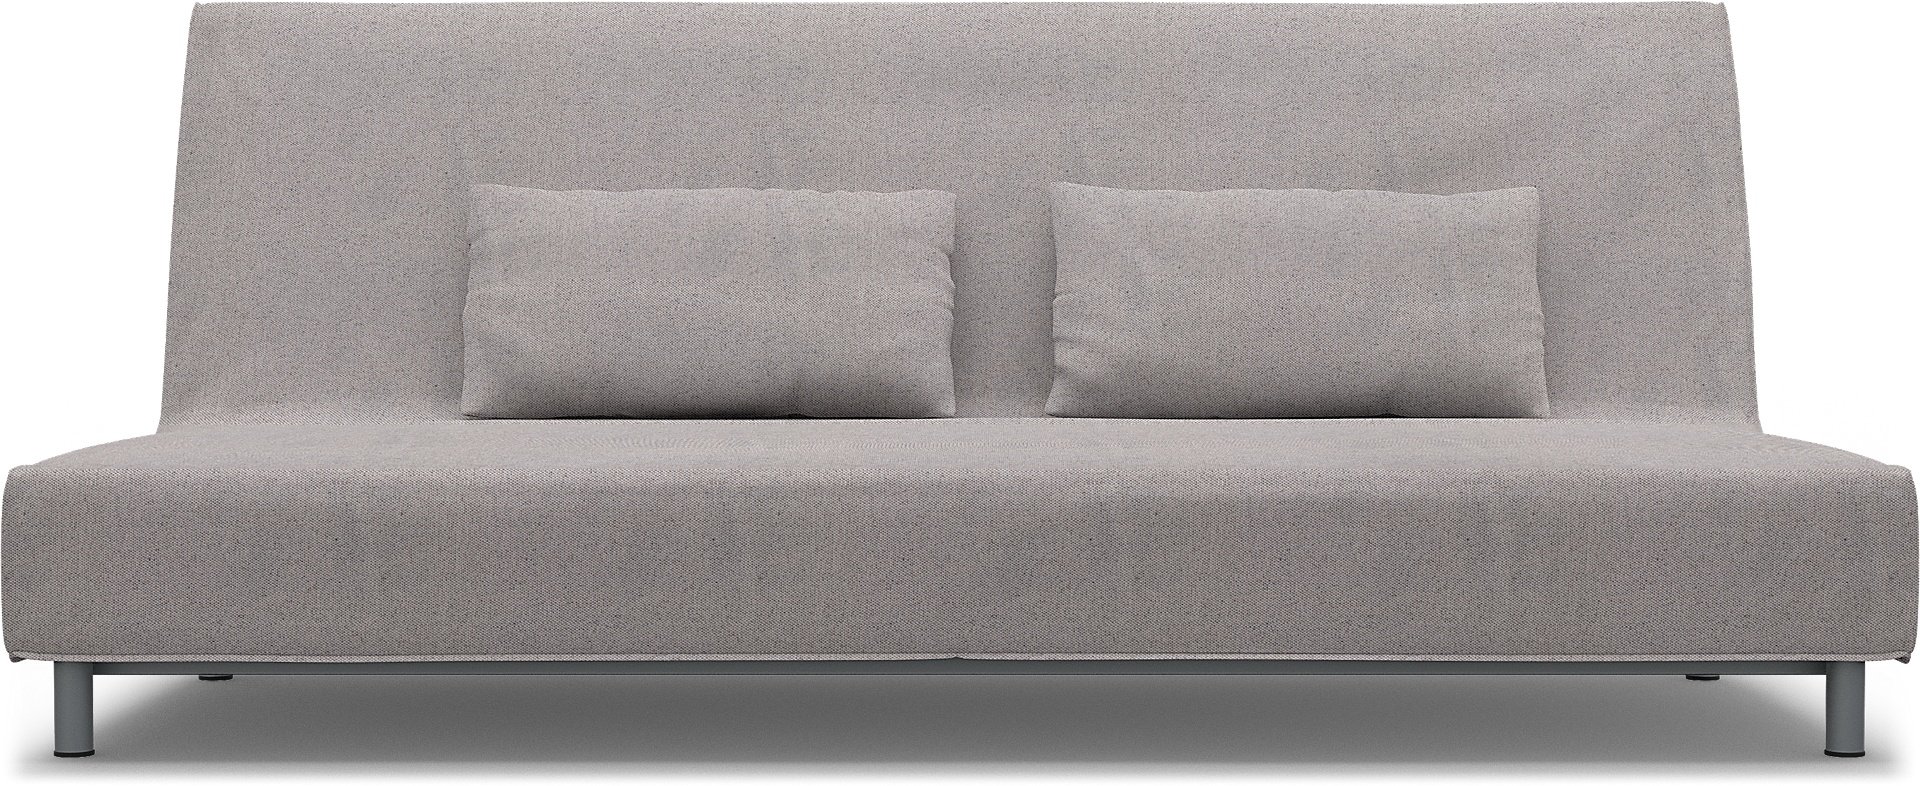 IKEA - Beddinge Sofa Bed Cover, Natural, Cotton - Bemz